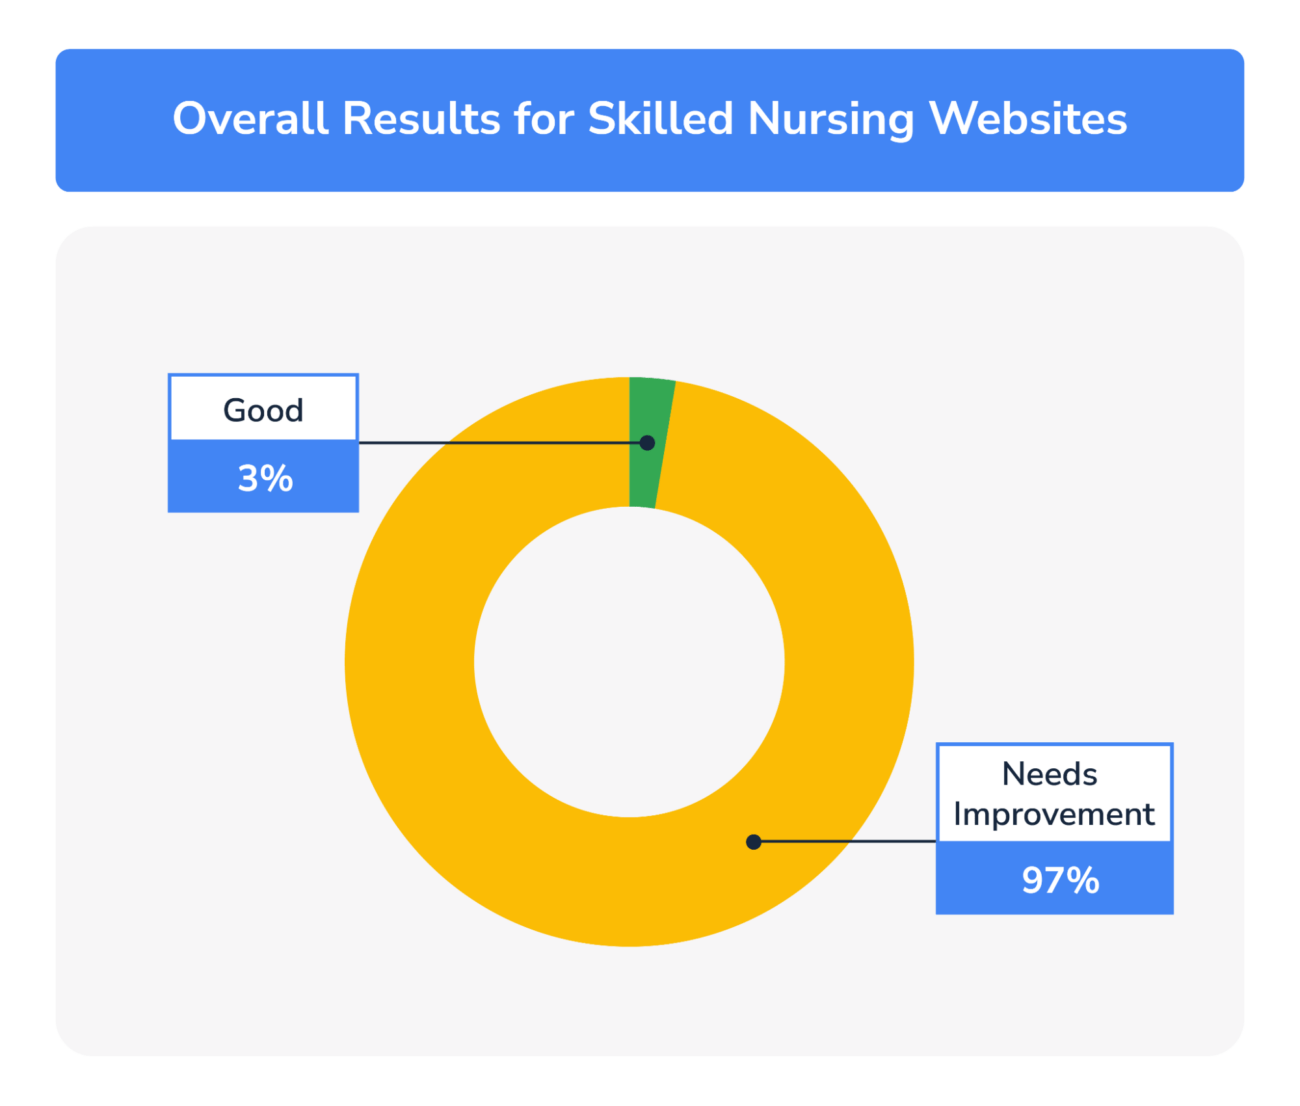 Overall results for skilled nursing websites